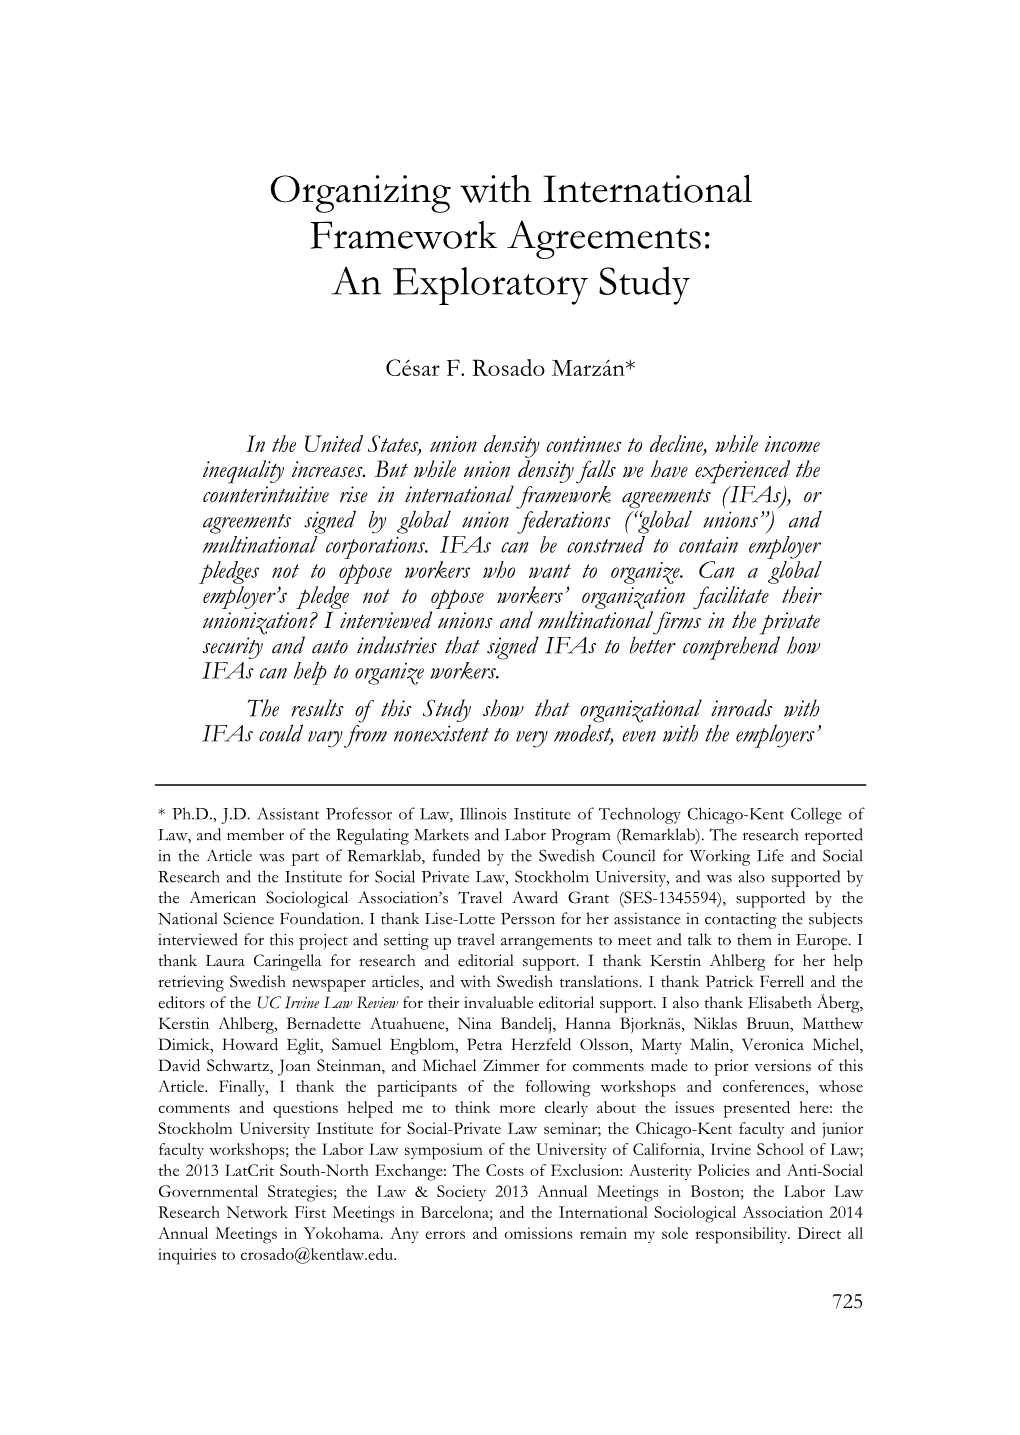 Organizing with International Framework Agreements: an Exploratory Study